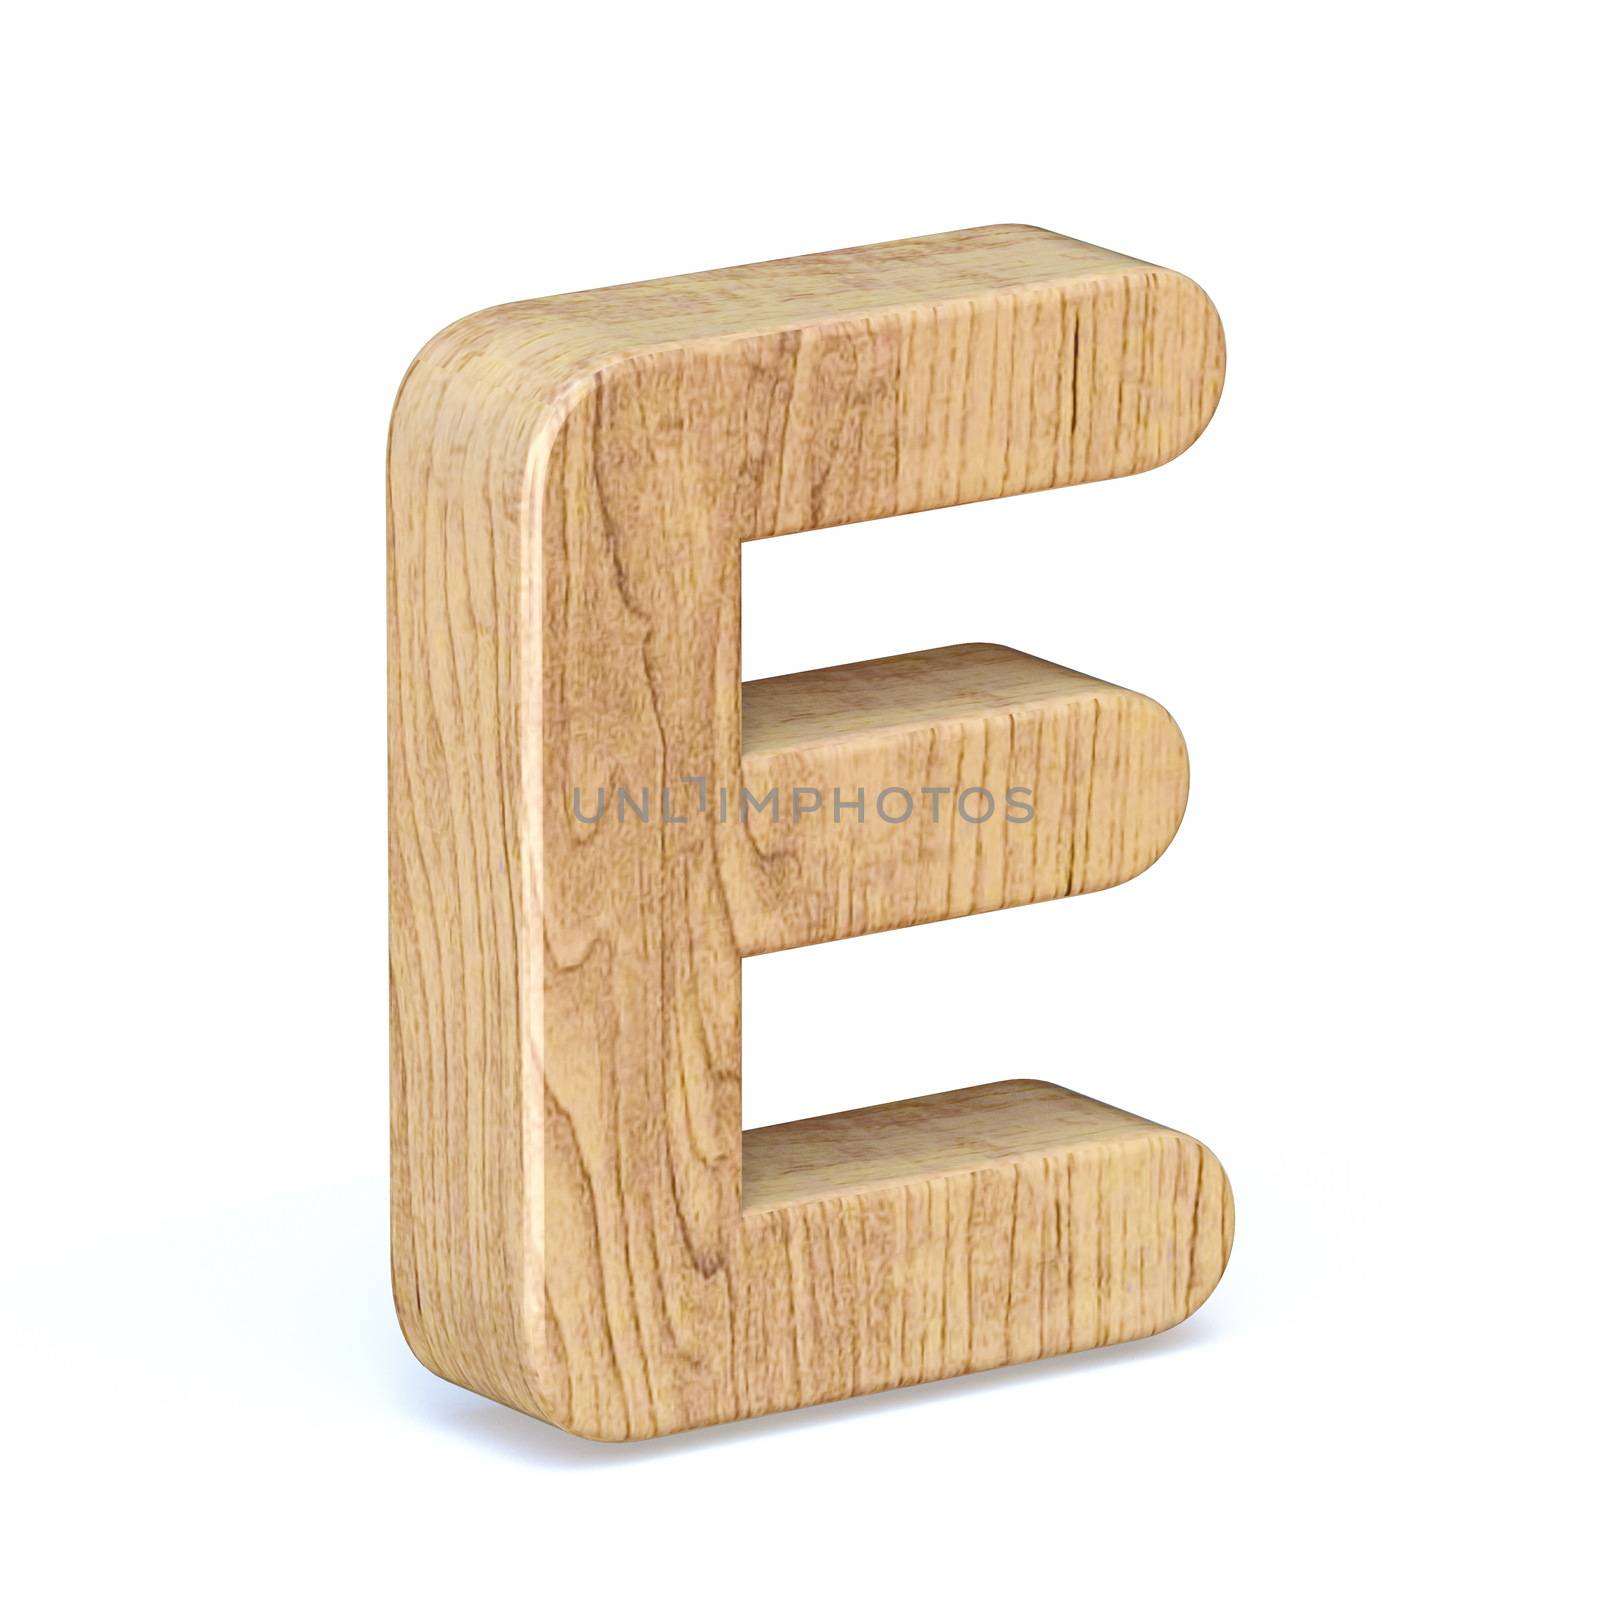 Rounded wooden font Letter E 3D render illustration isolated on white background